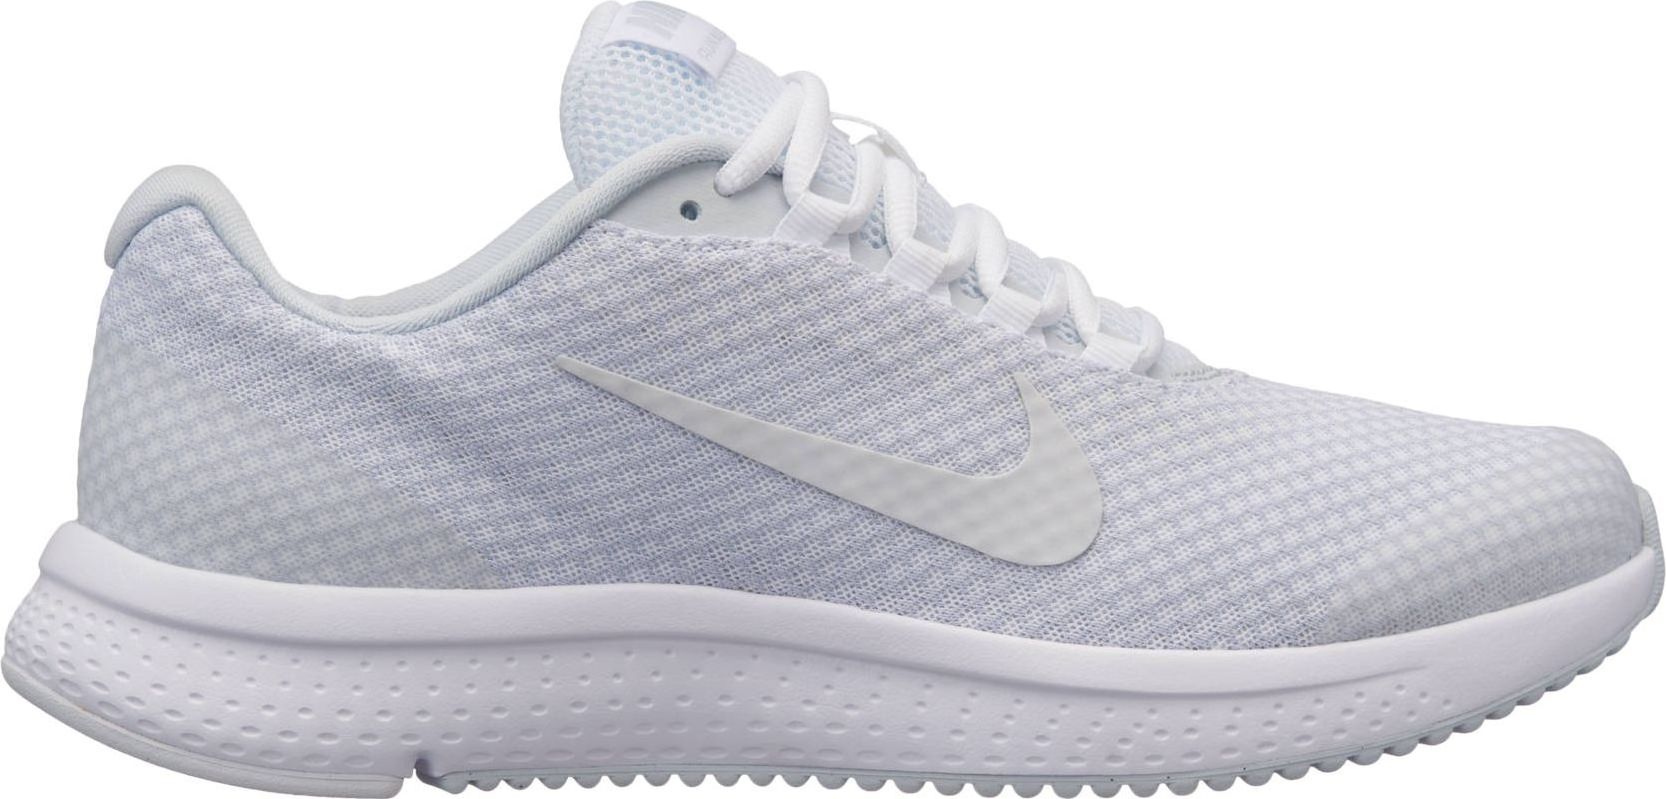 Кроссовки для бега женские Nike Run All Day, цвет: белый. 898484-101. Размер 6,5 (36,5)